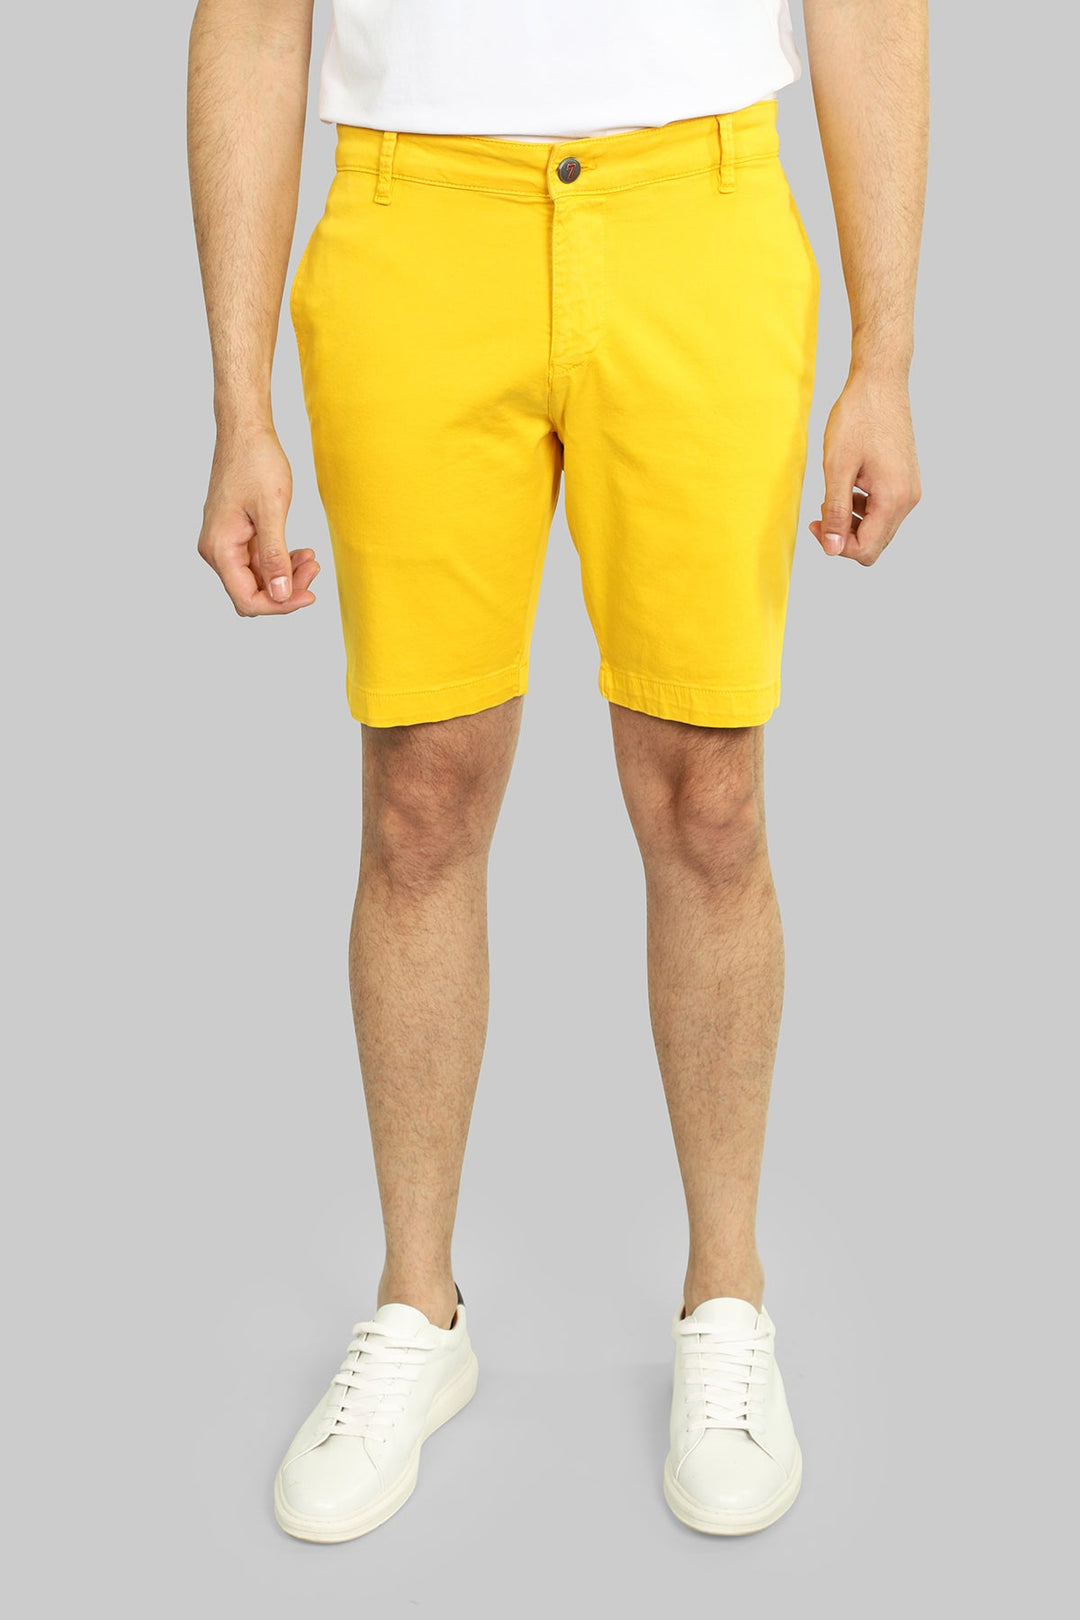 Yellow Shorts - 7 Downie St.®